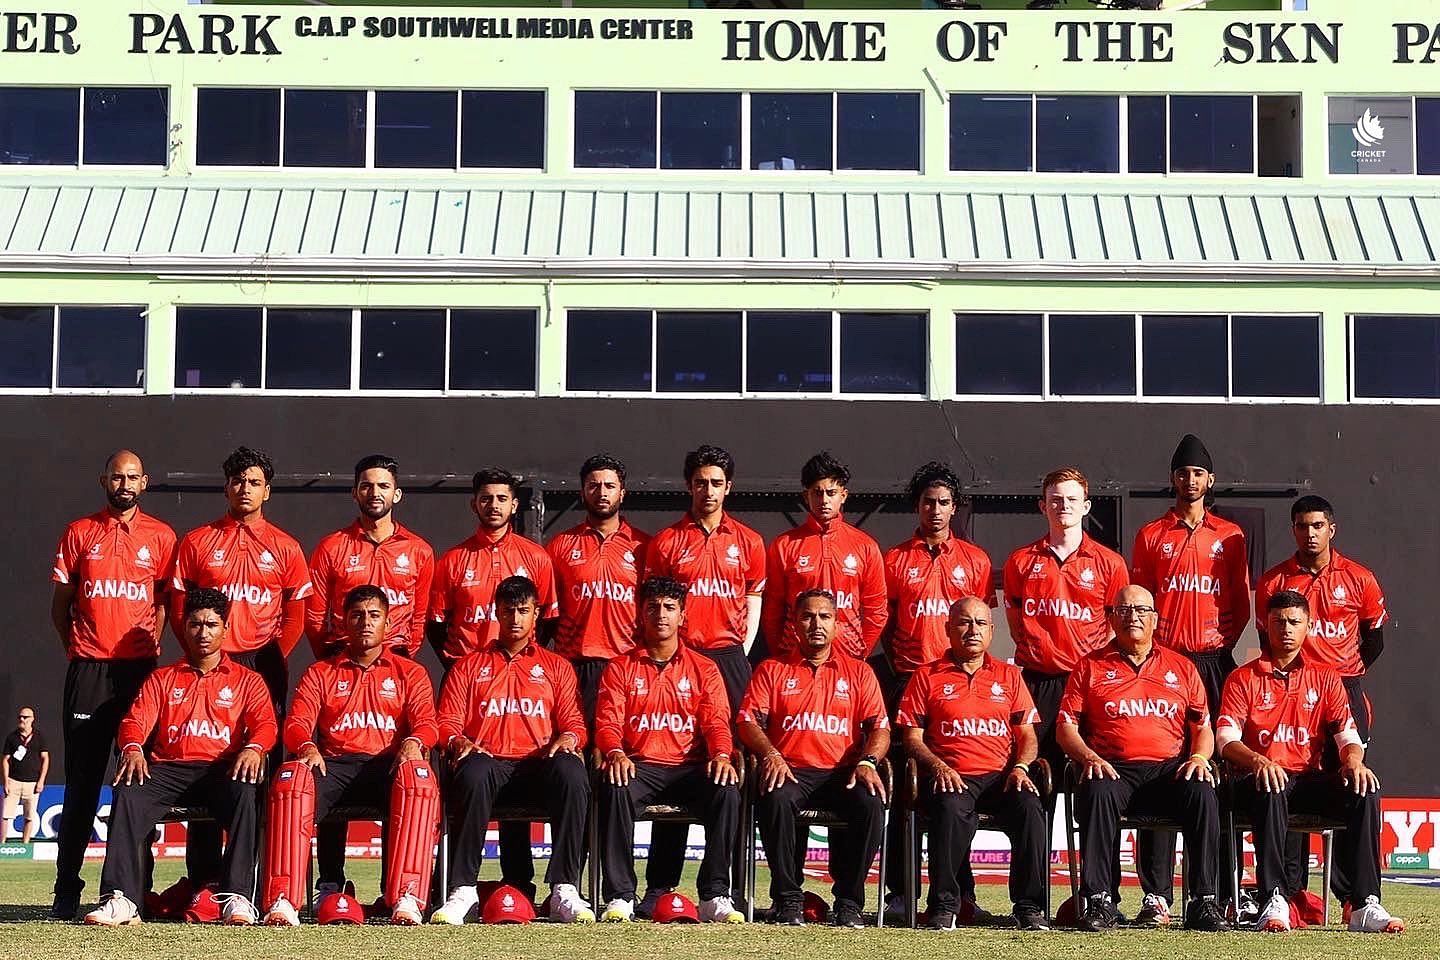 Canada Cricket Team. Courtesy: Canada Cricket